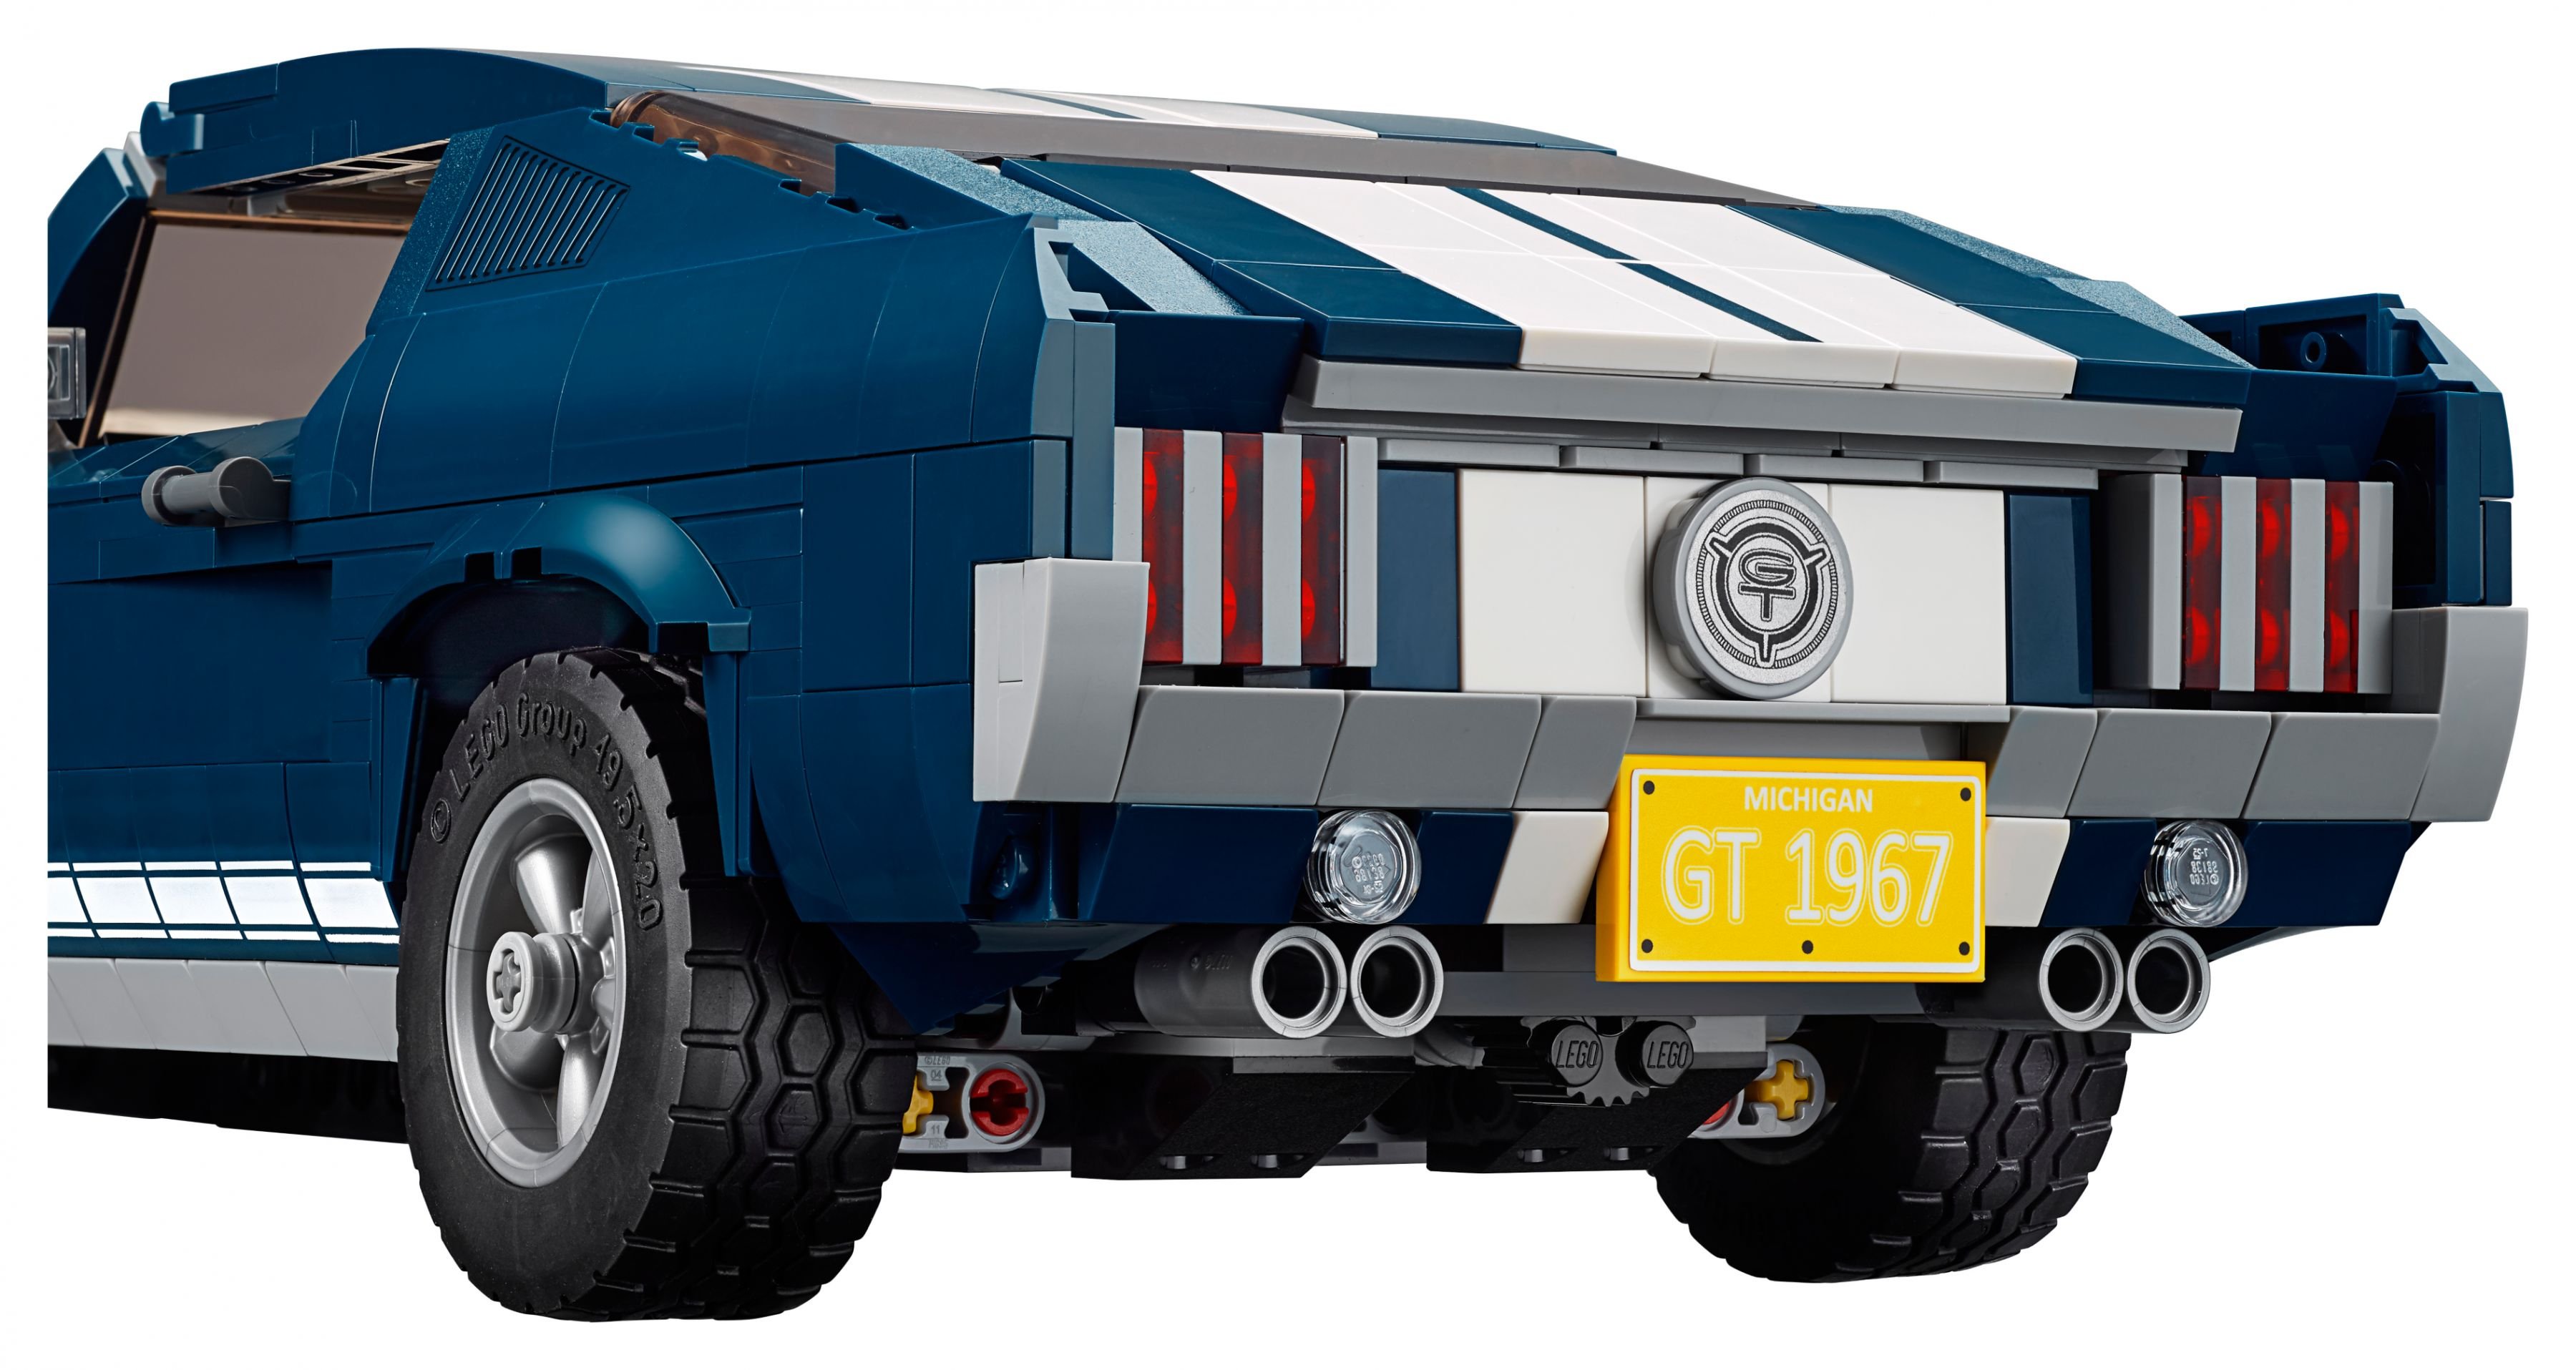 LEGO Advanced Models 10265 Ford Mustang GT LEGO_10265_alt8.jpg